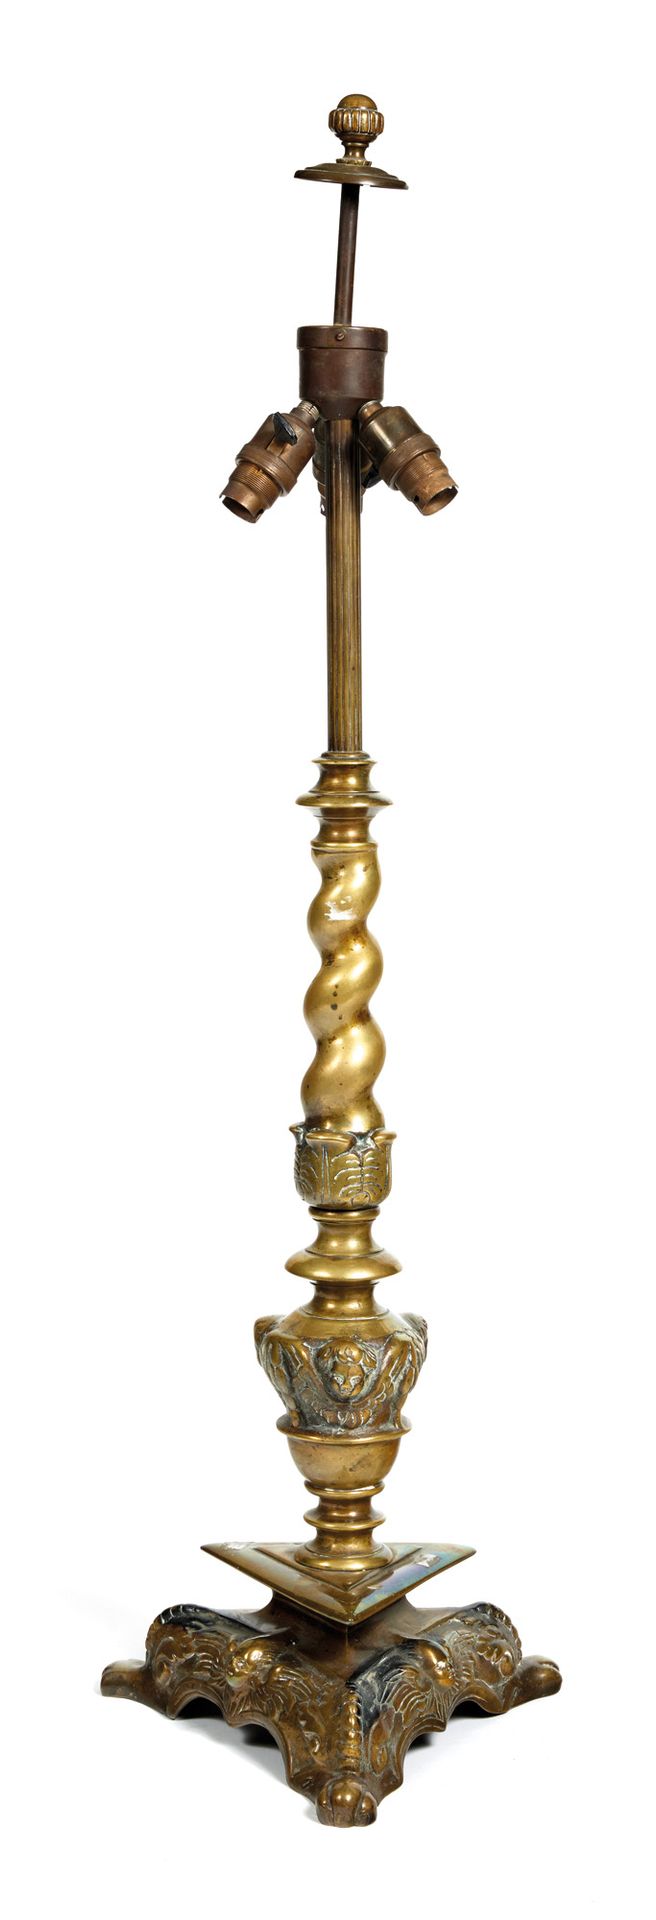 Pique-cierge 鎏金铜基座

鎏金青铜，躯干柱子和三角底座，带海豚头，作为灯安装

19世纪

高度：56厘米

(转型)